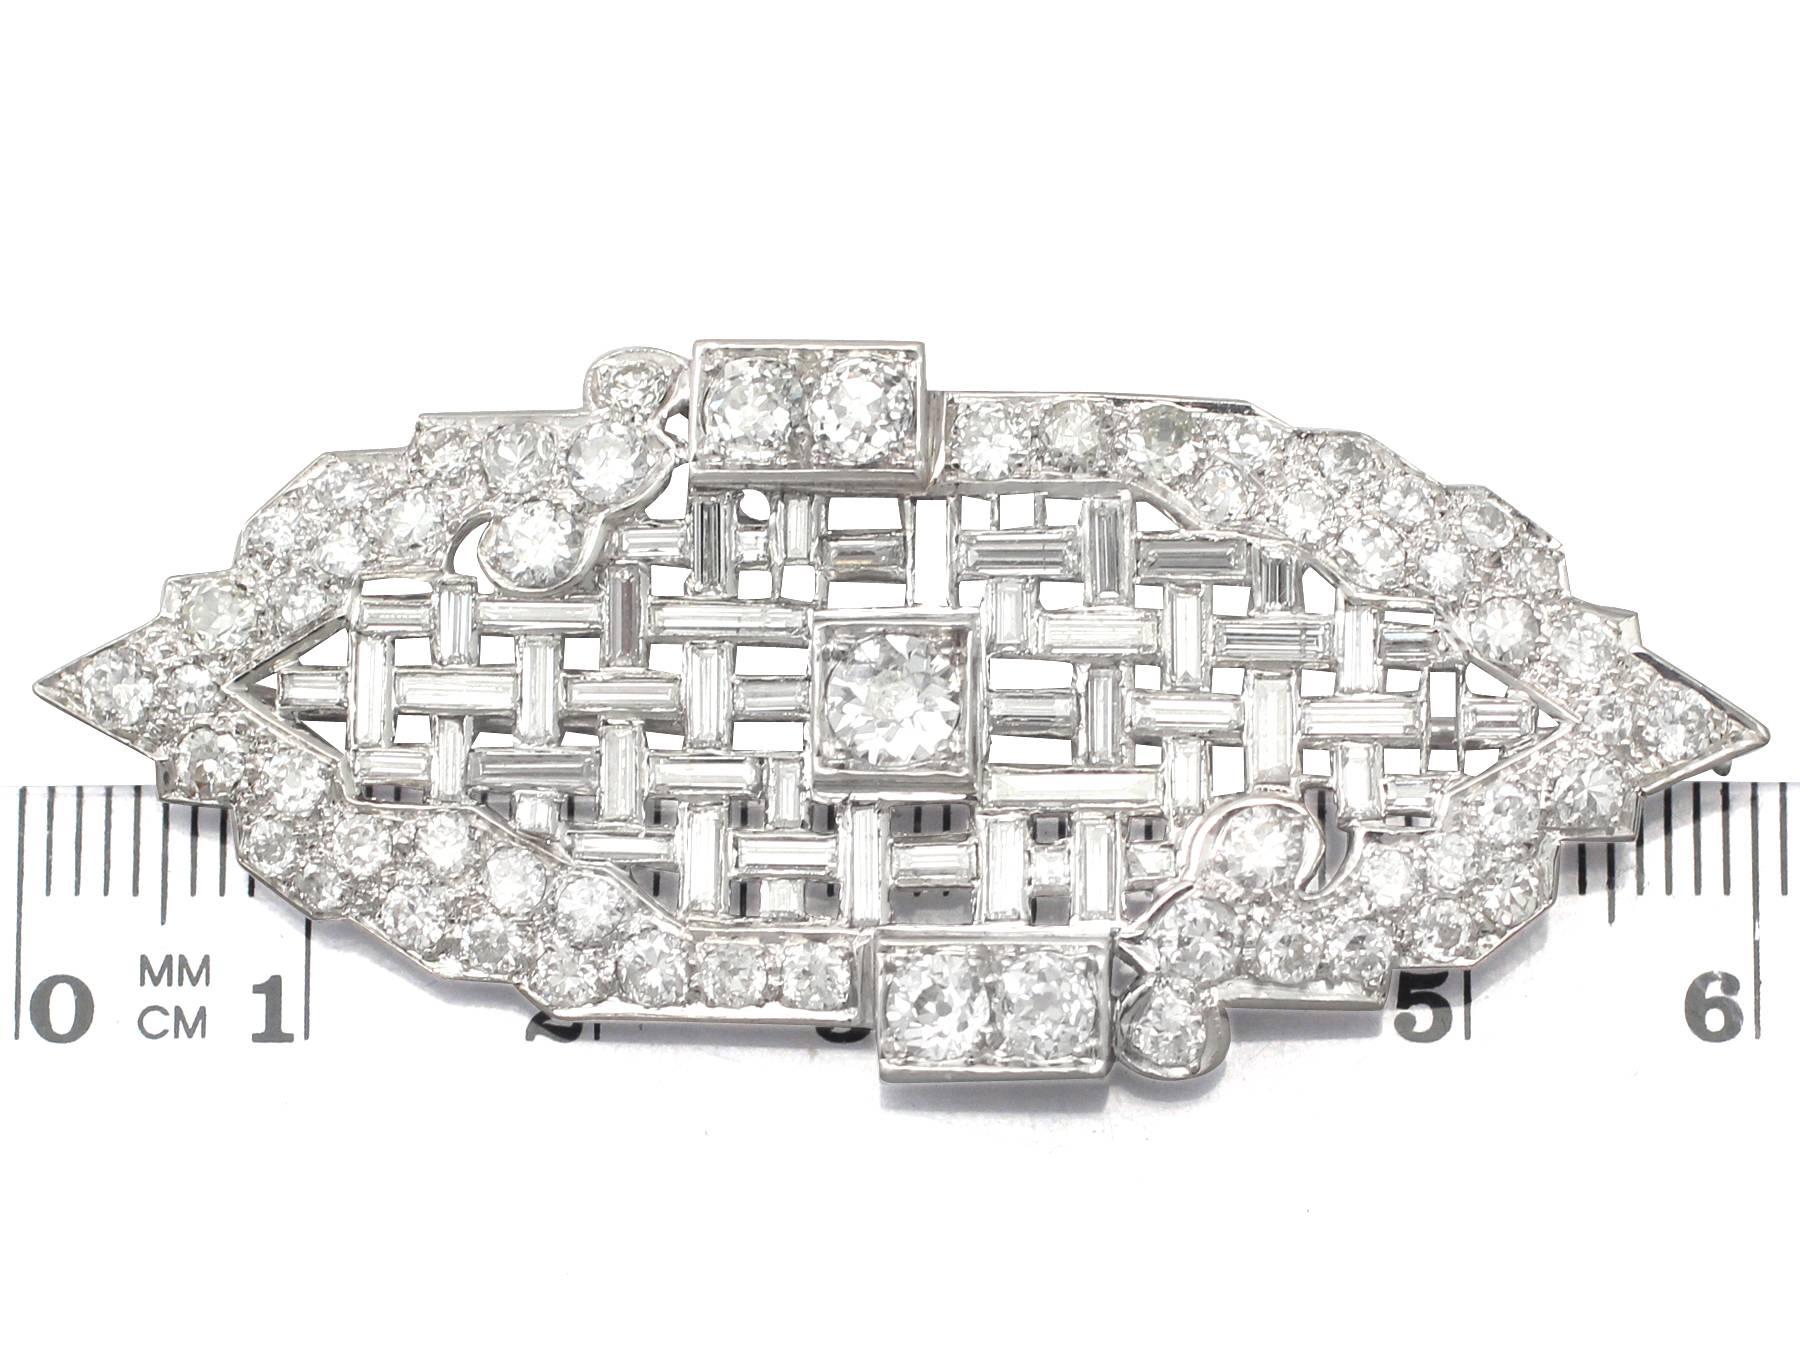 5.83Ct Diamond and Platinum Brooch - Art Deco Style - Antique Circa 1920 3